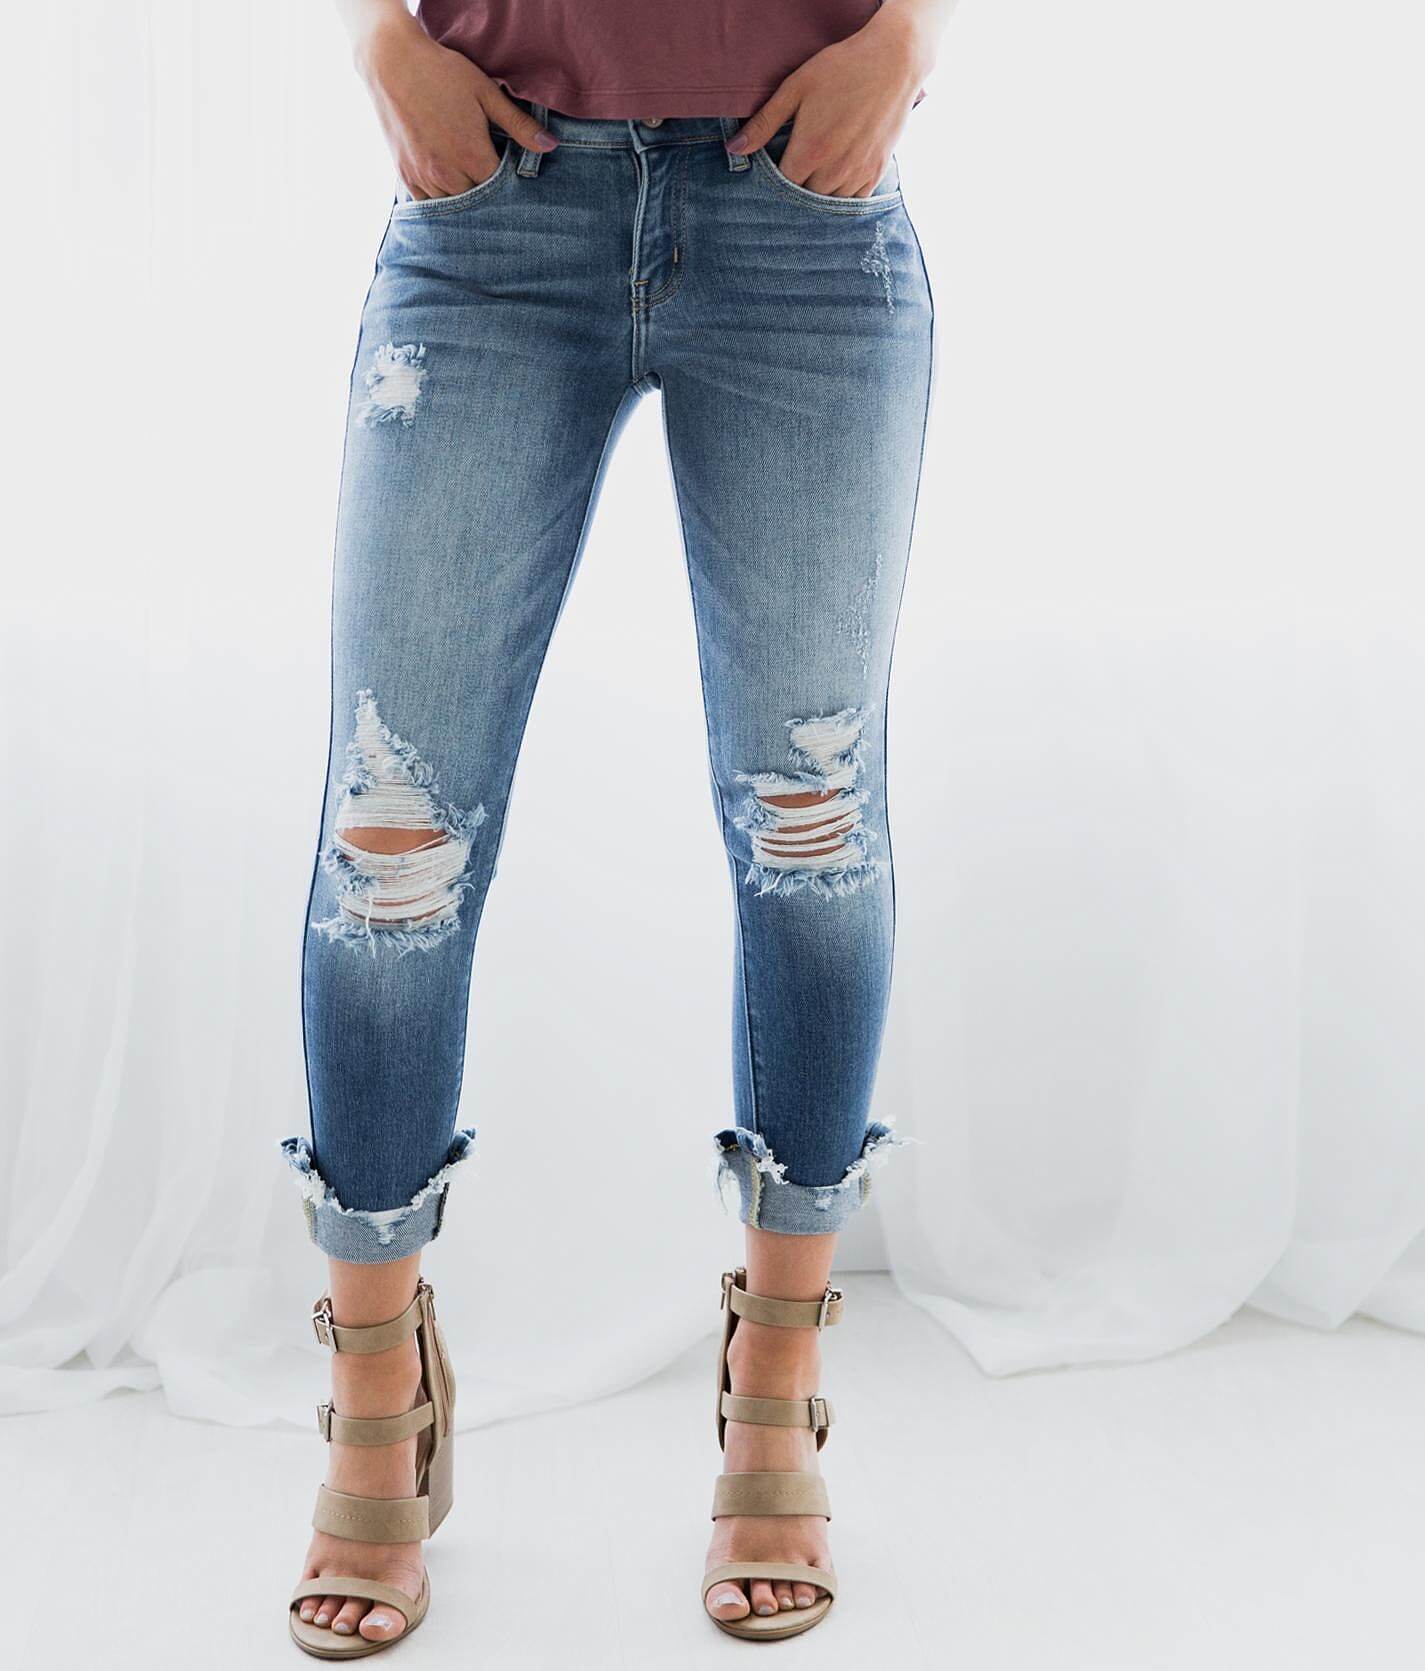 kancan jeans low rise